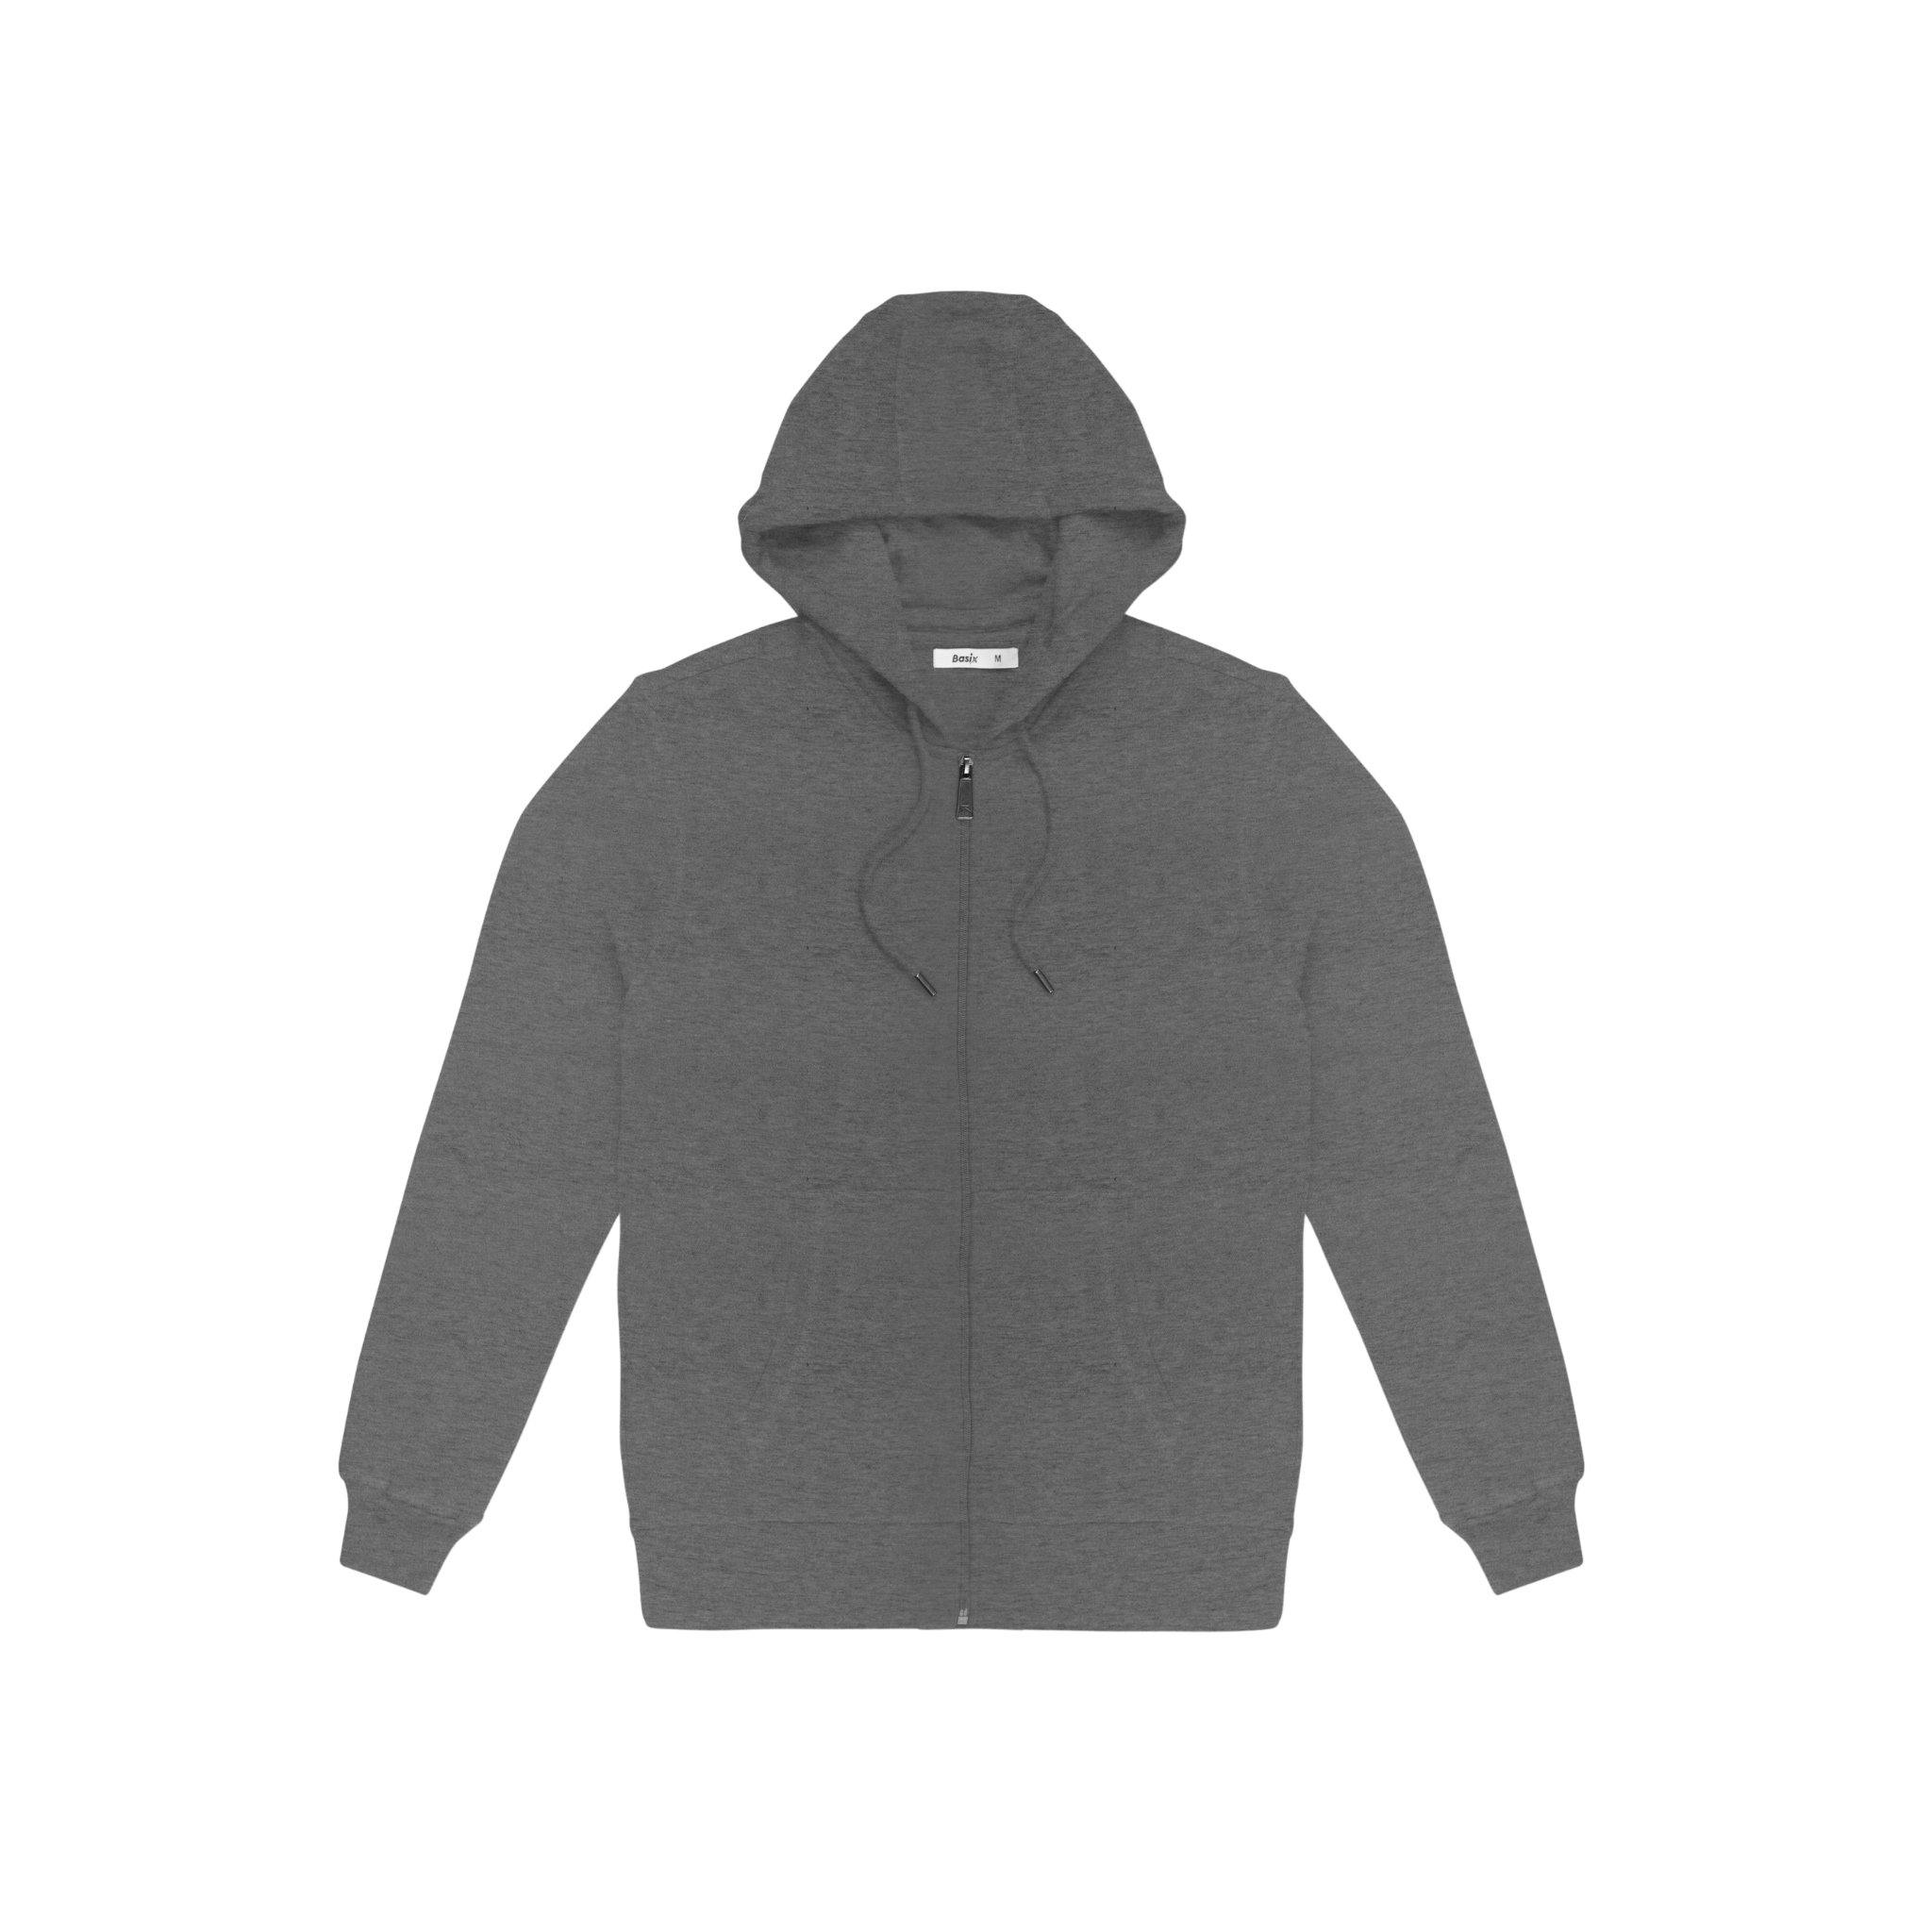 Hooded Plain Mens Black Zipper Sweatshirt, Size: S To Xl, Handwash at Rs  350/piece in Ludhiana